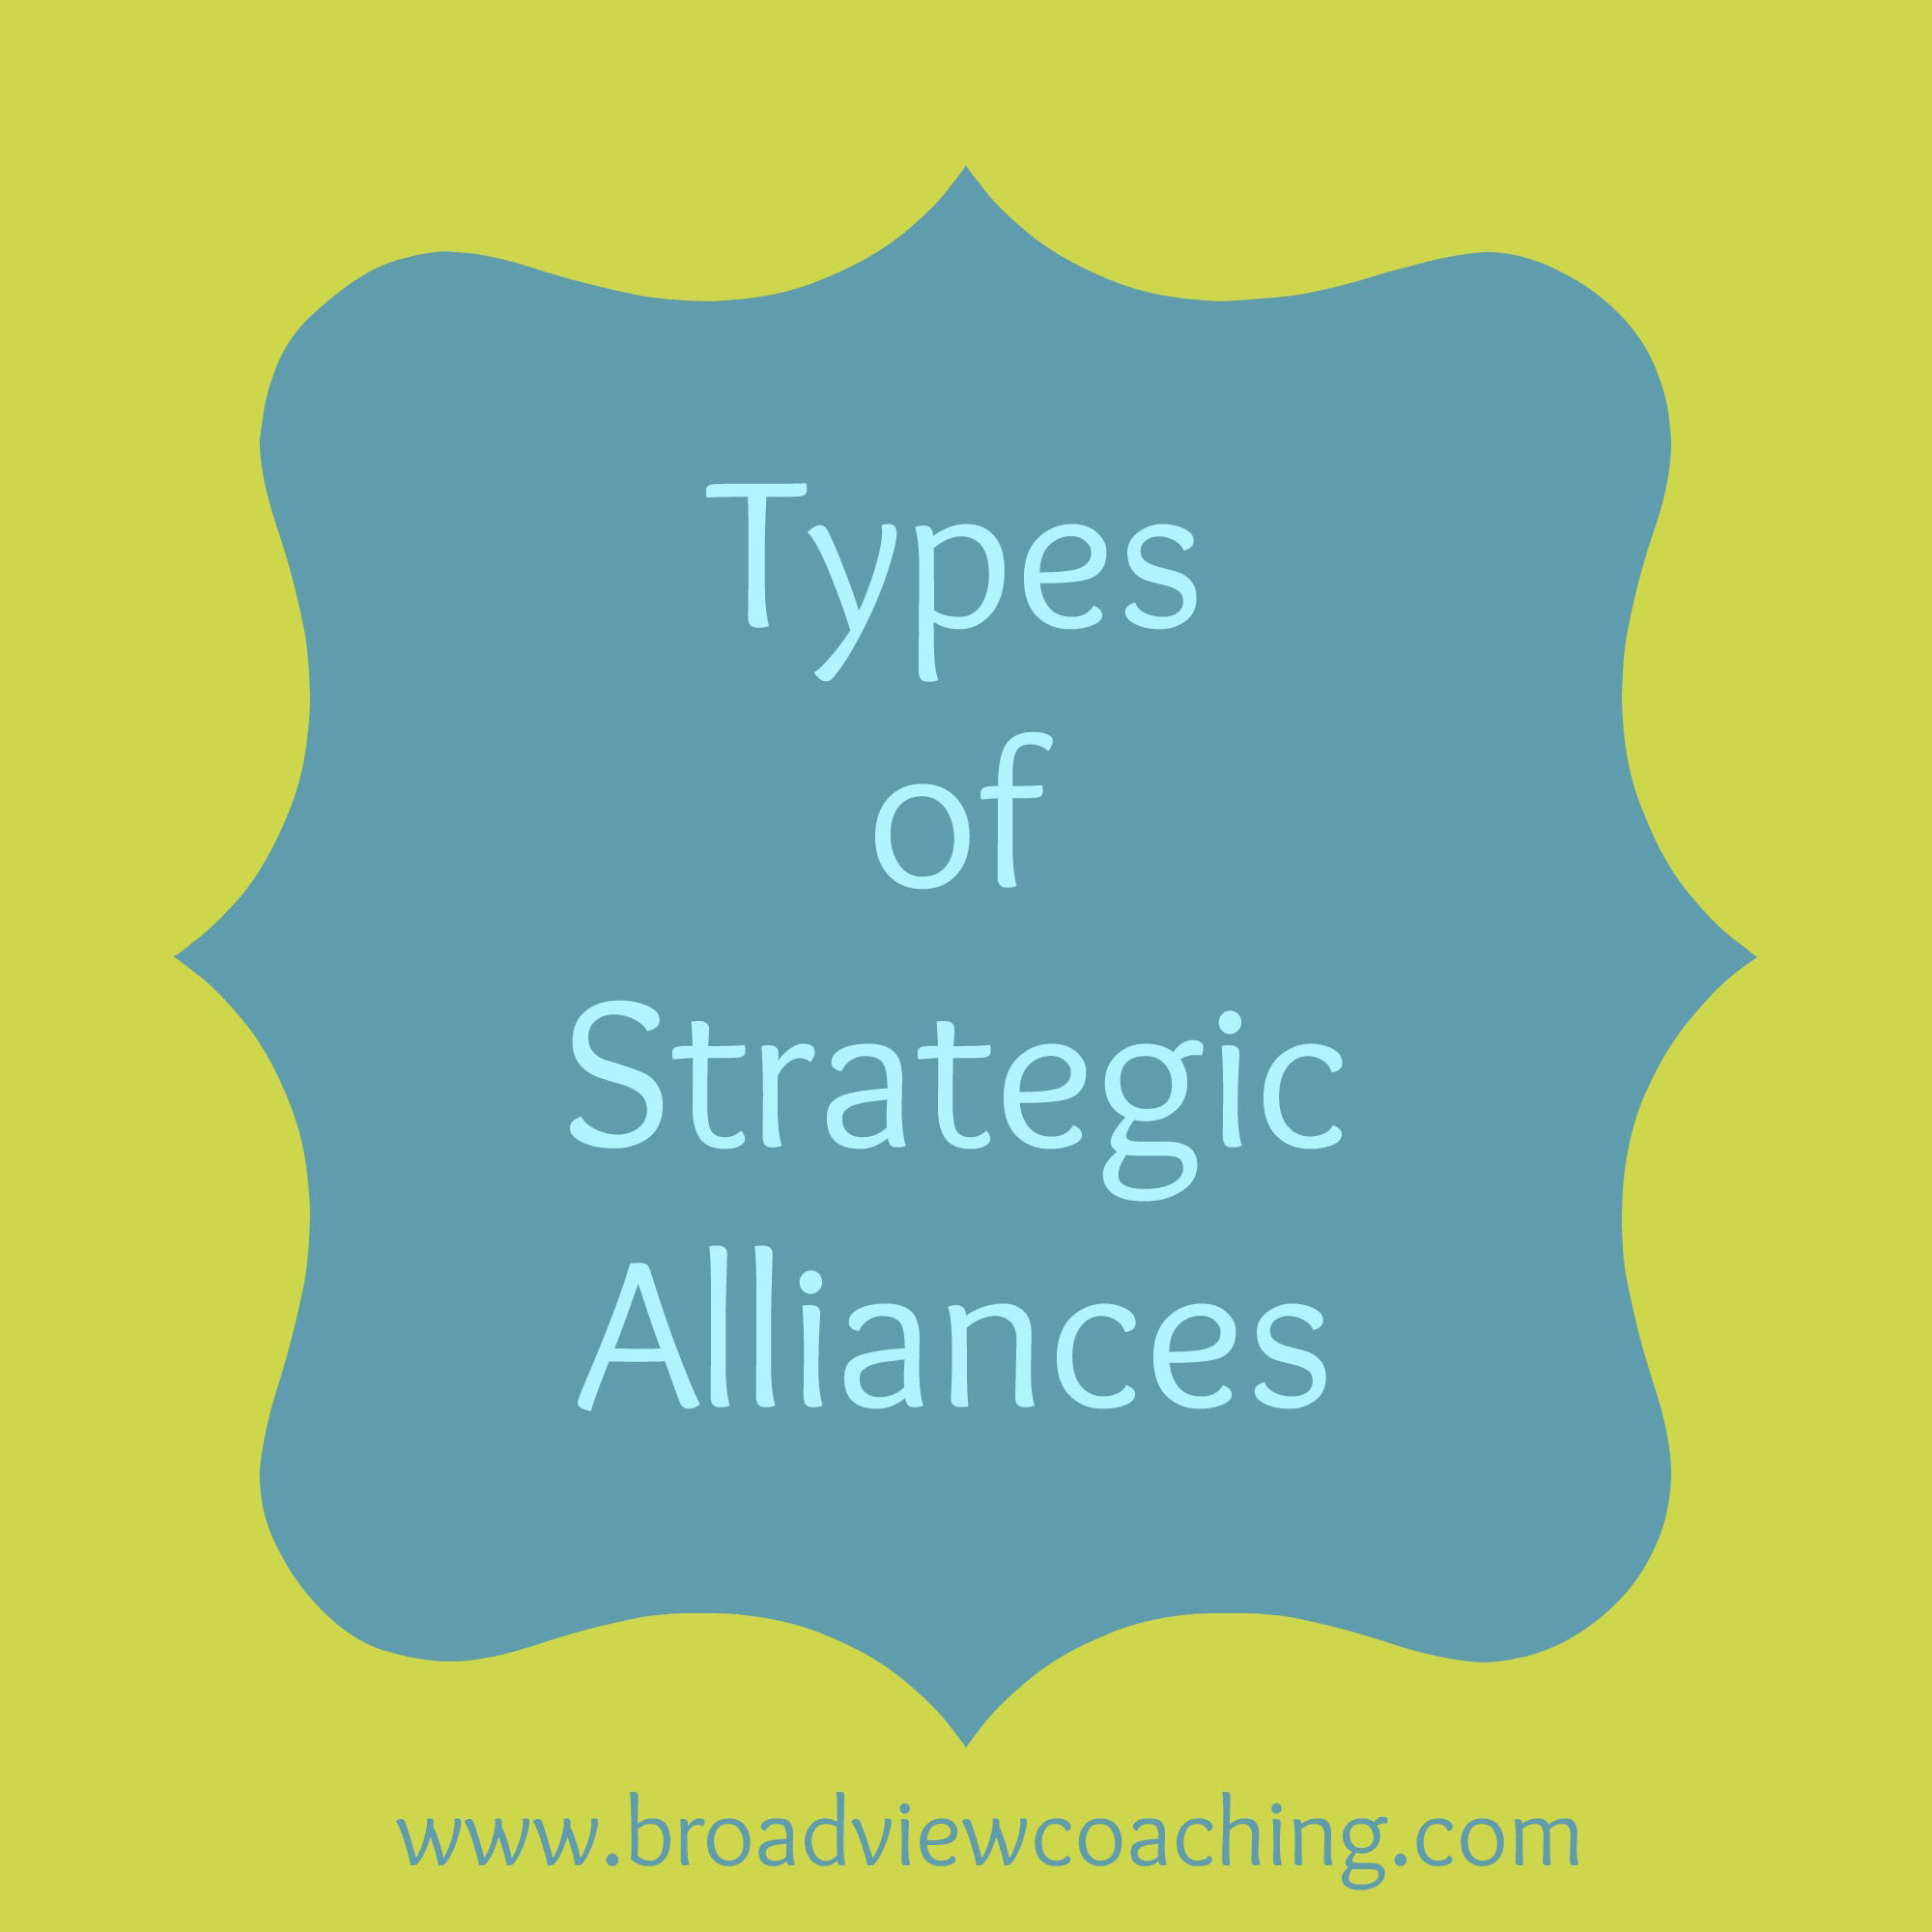 Types of Strategic Alliances